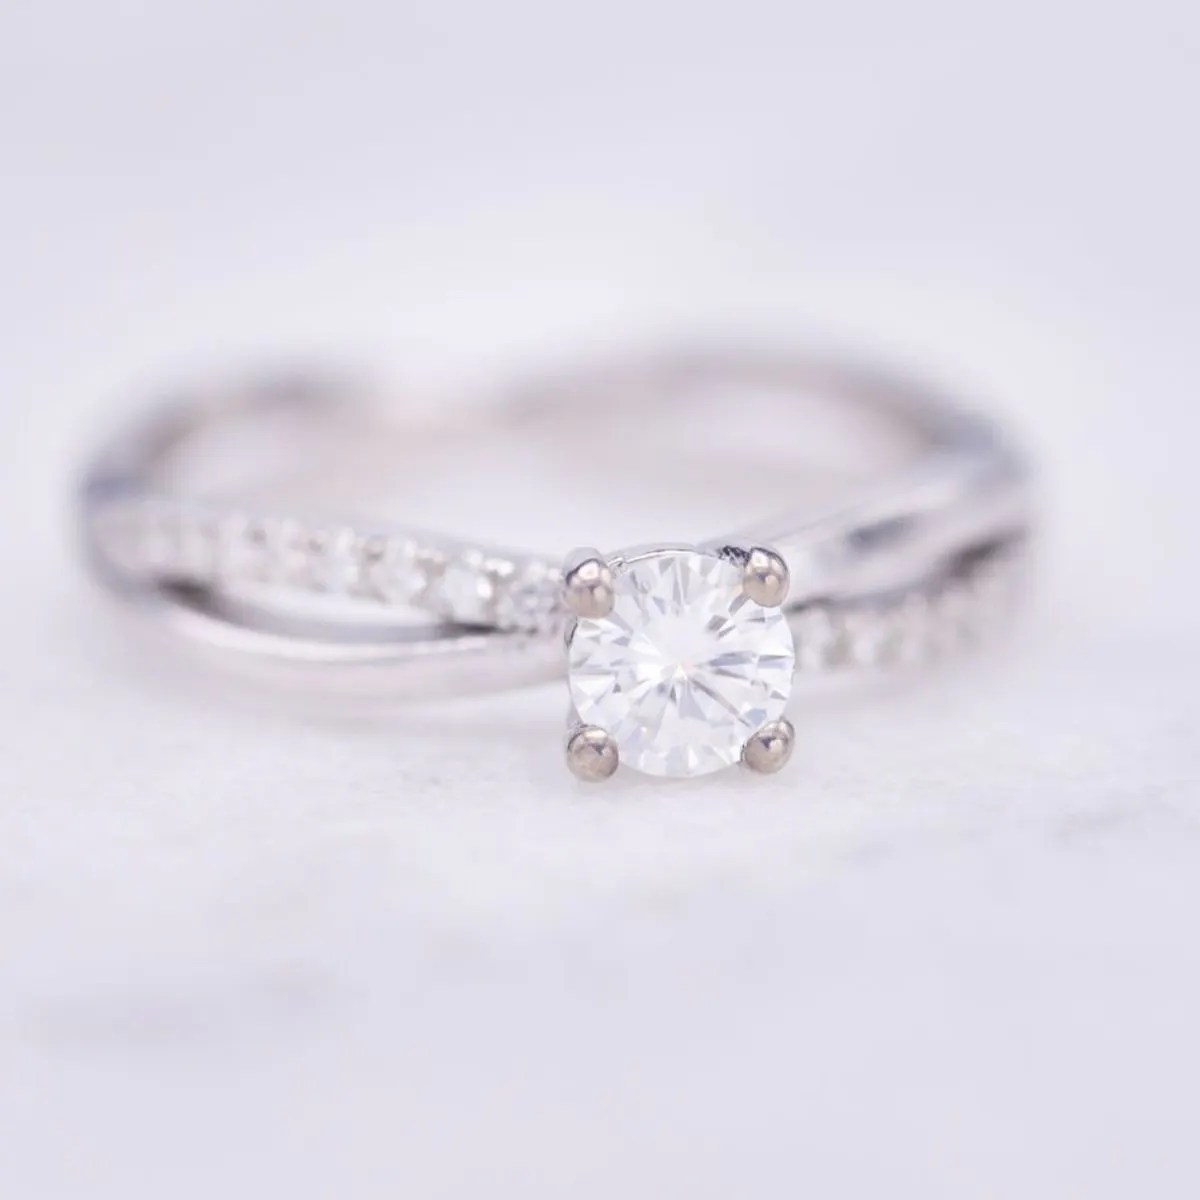 moissanite vs diamond - moissanite engagement ring twisting pave band